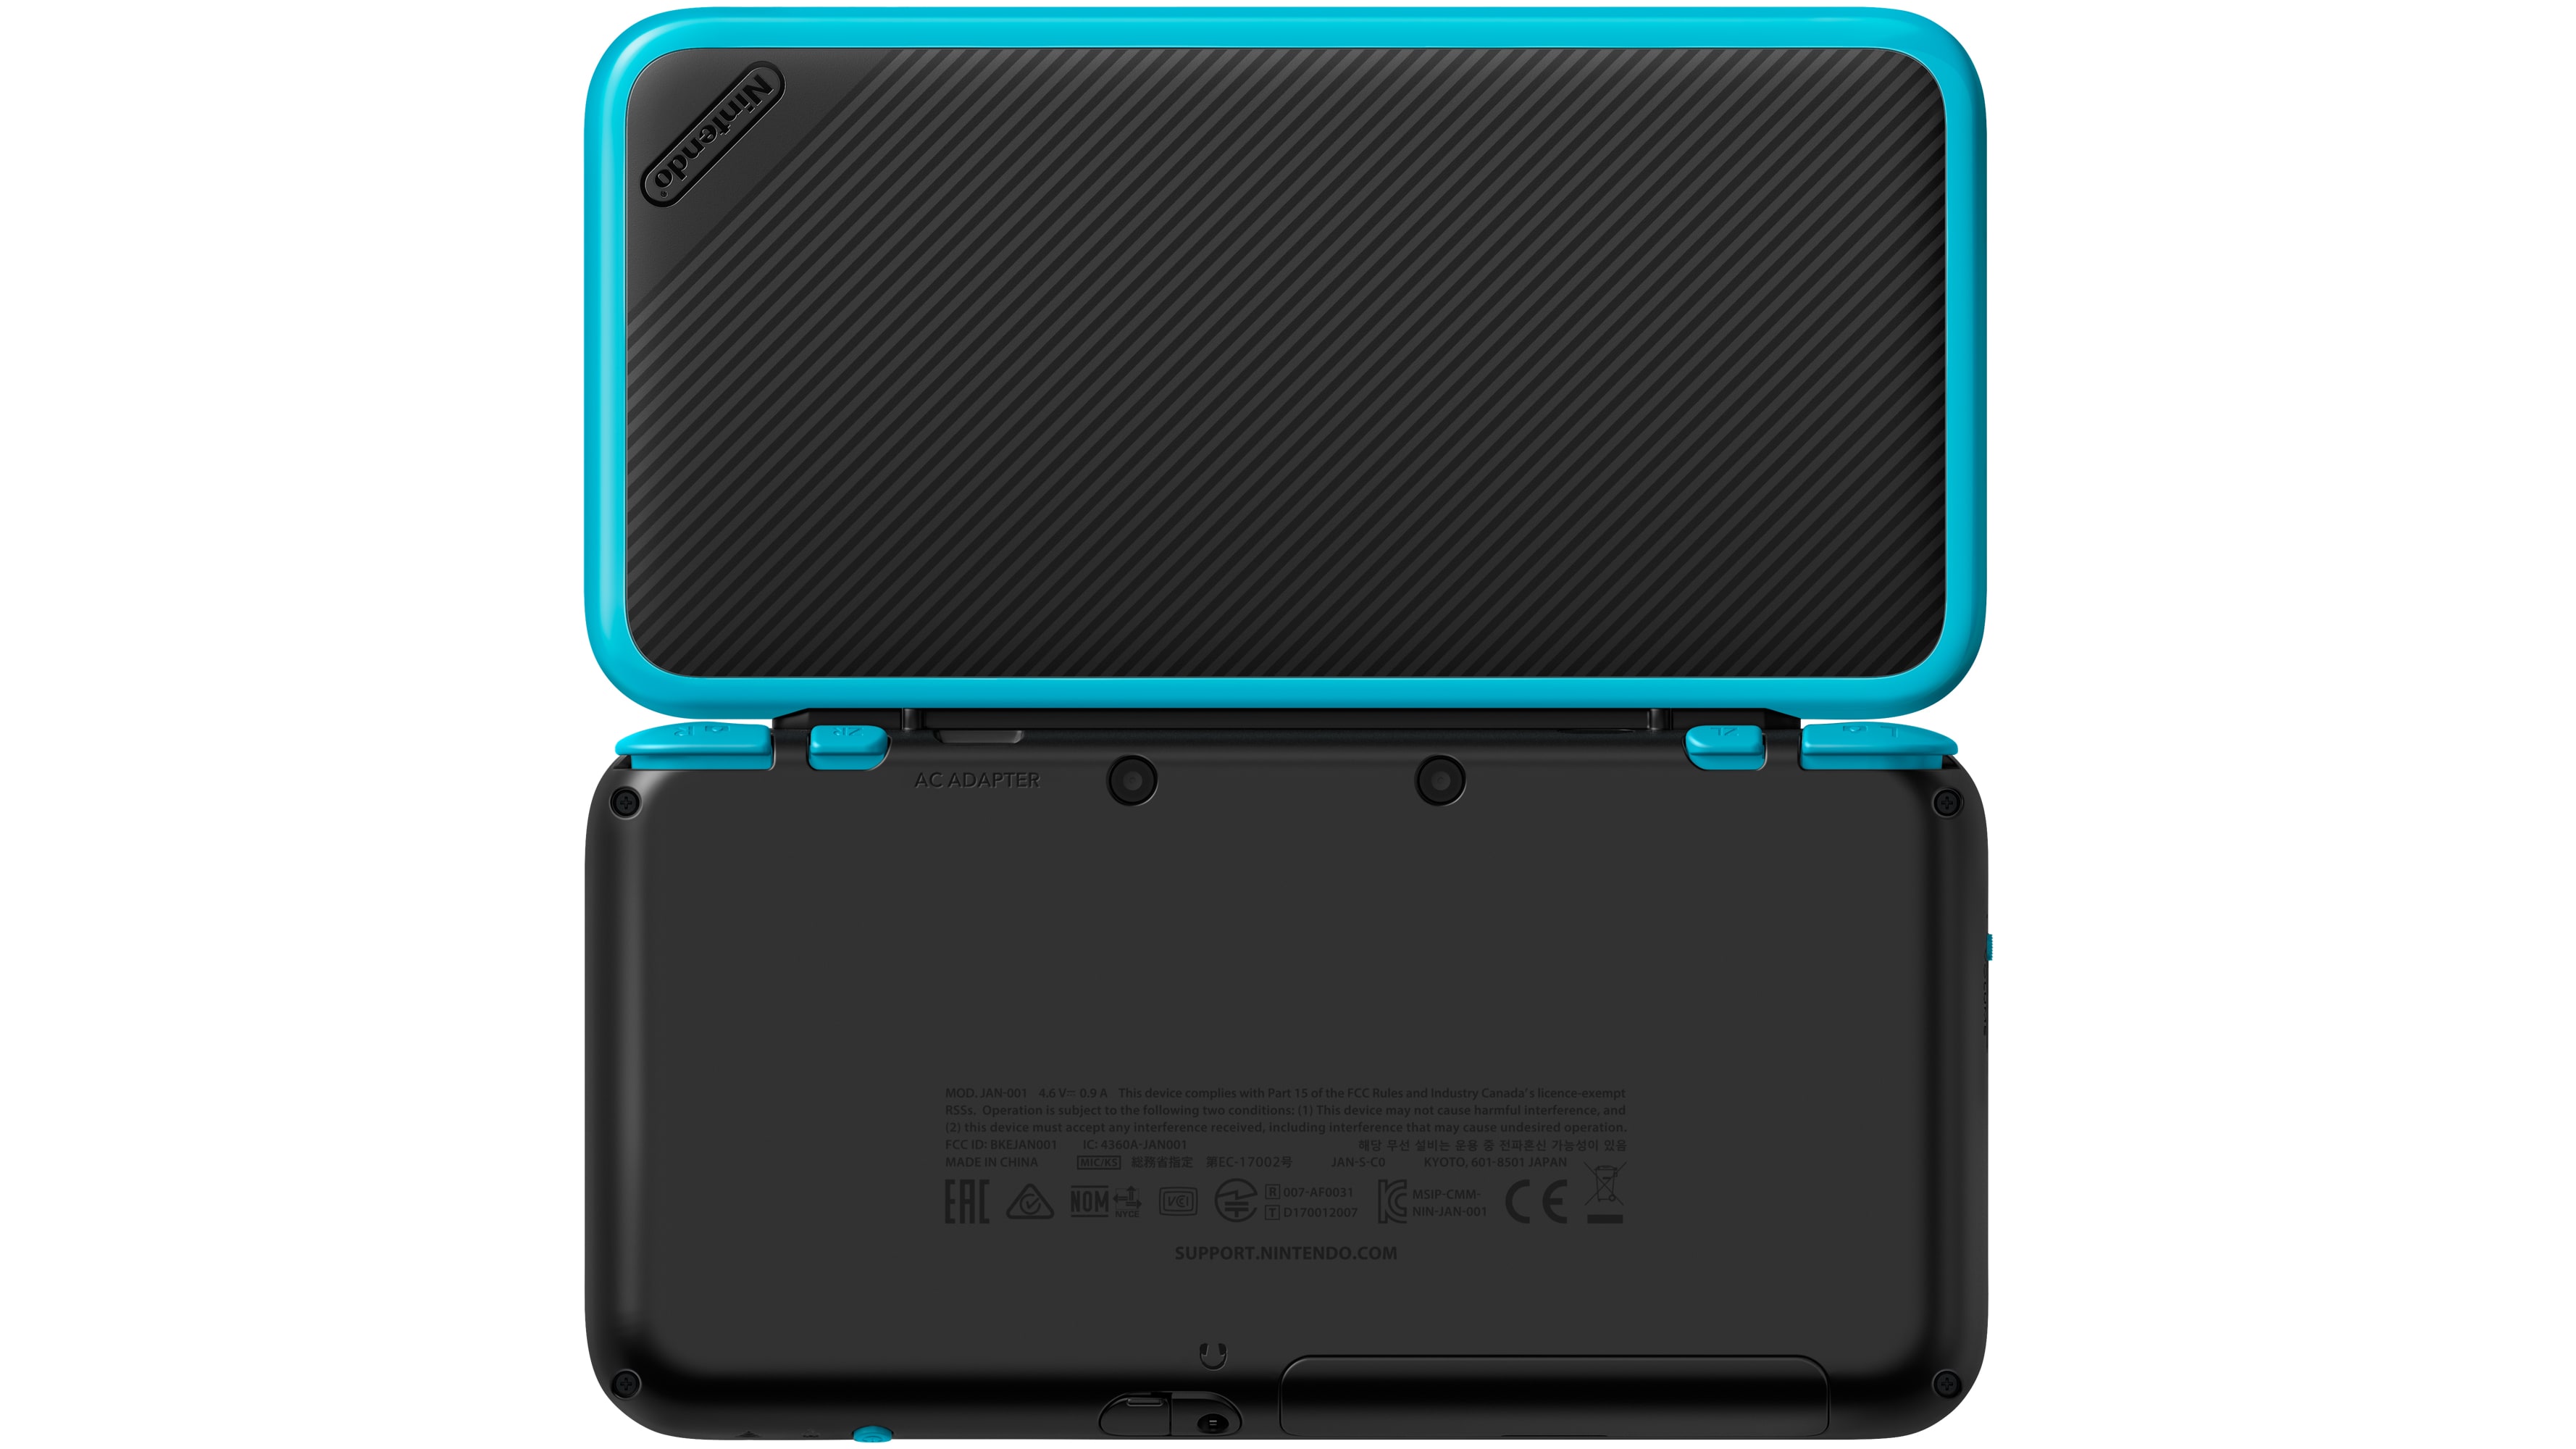 New Nintendo 2DS XL - Black + Turquoise - REFURBISHED - Nintendo 